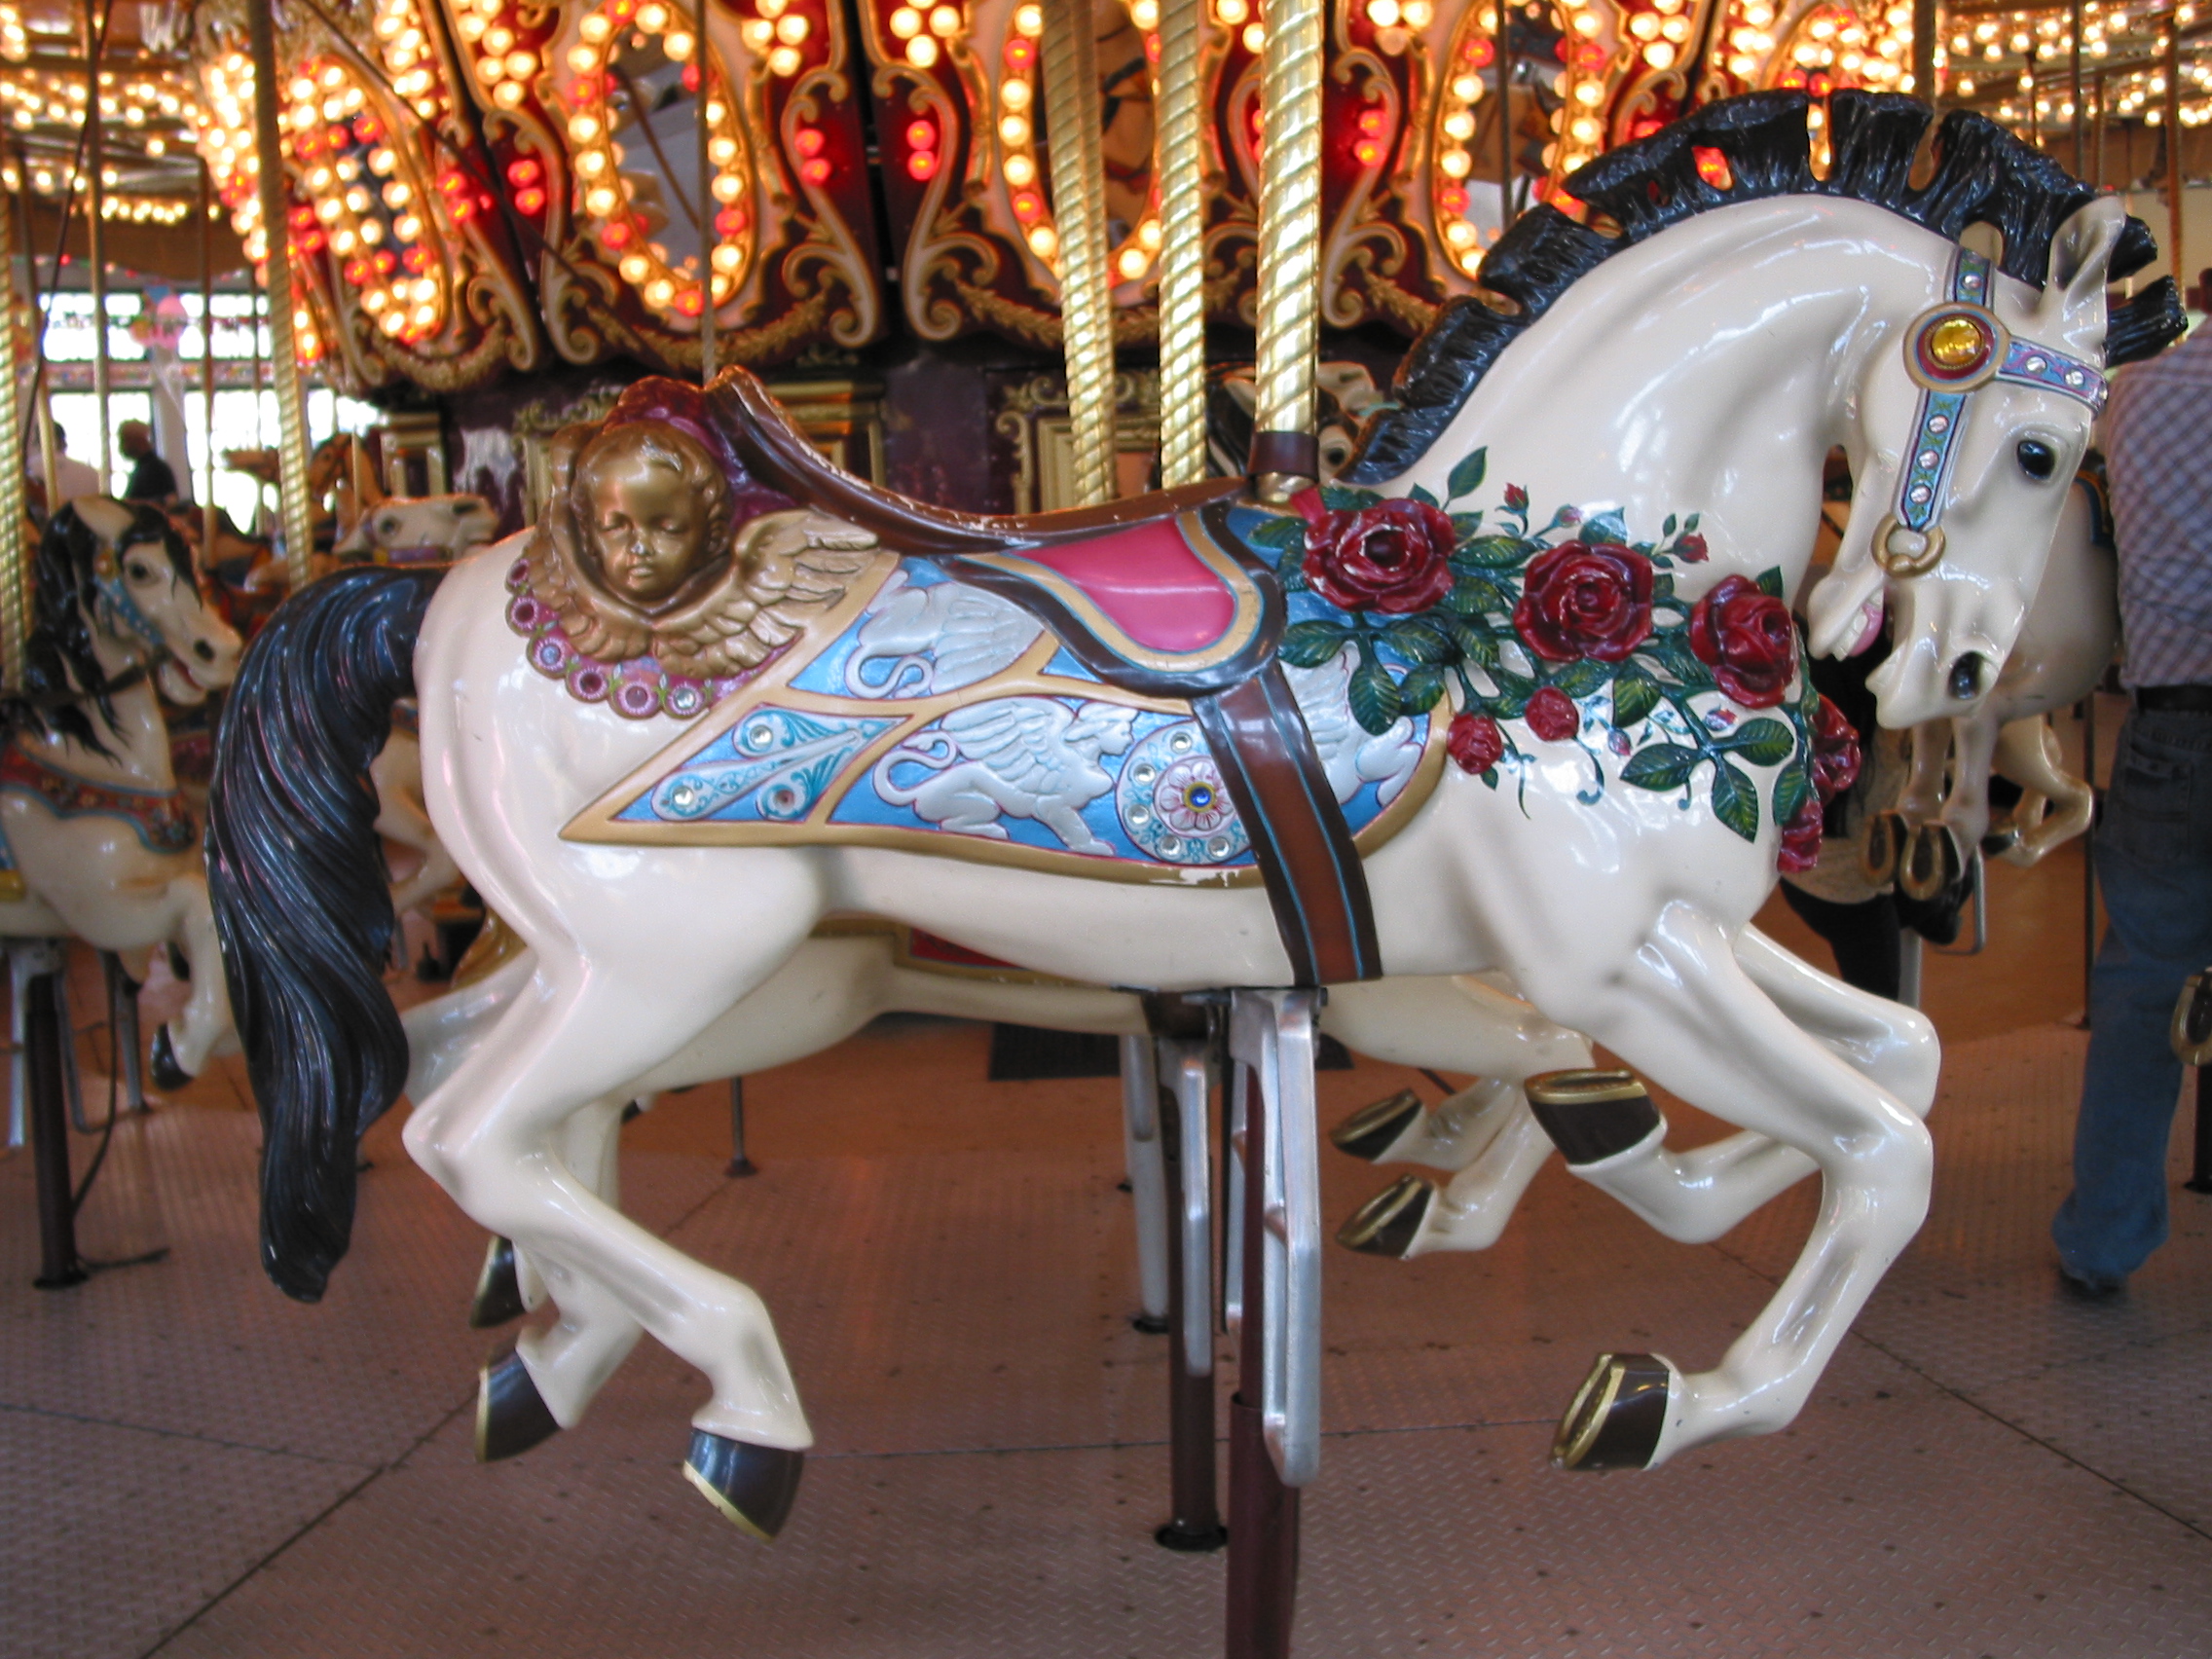 File:Carousel Horse Alc2.JPG - Wikimedia Commons